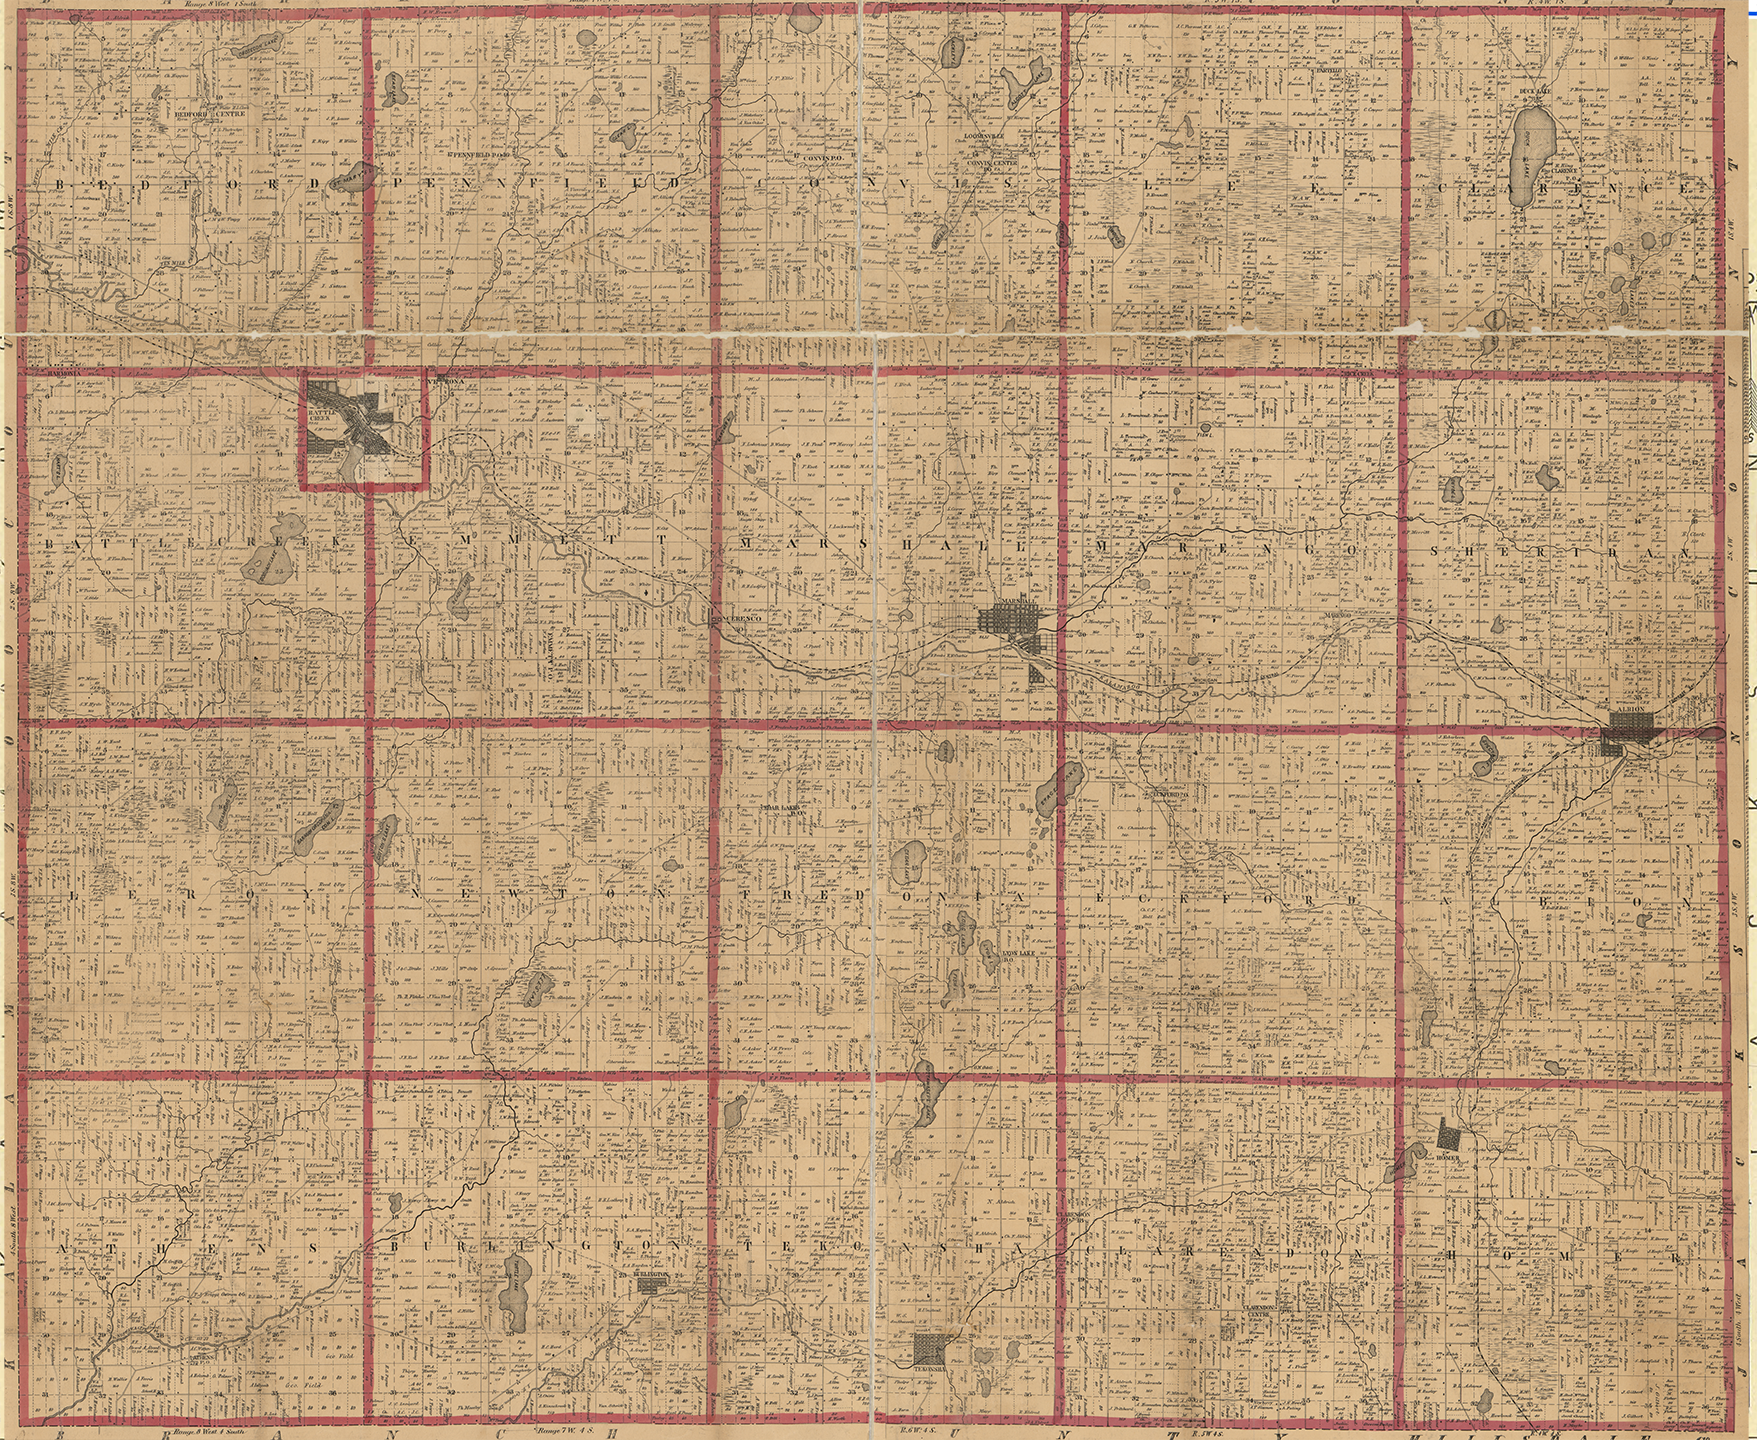 1858 Calhoun County Michigan landownership map